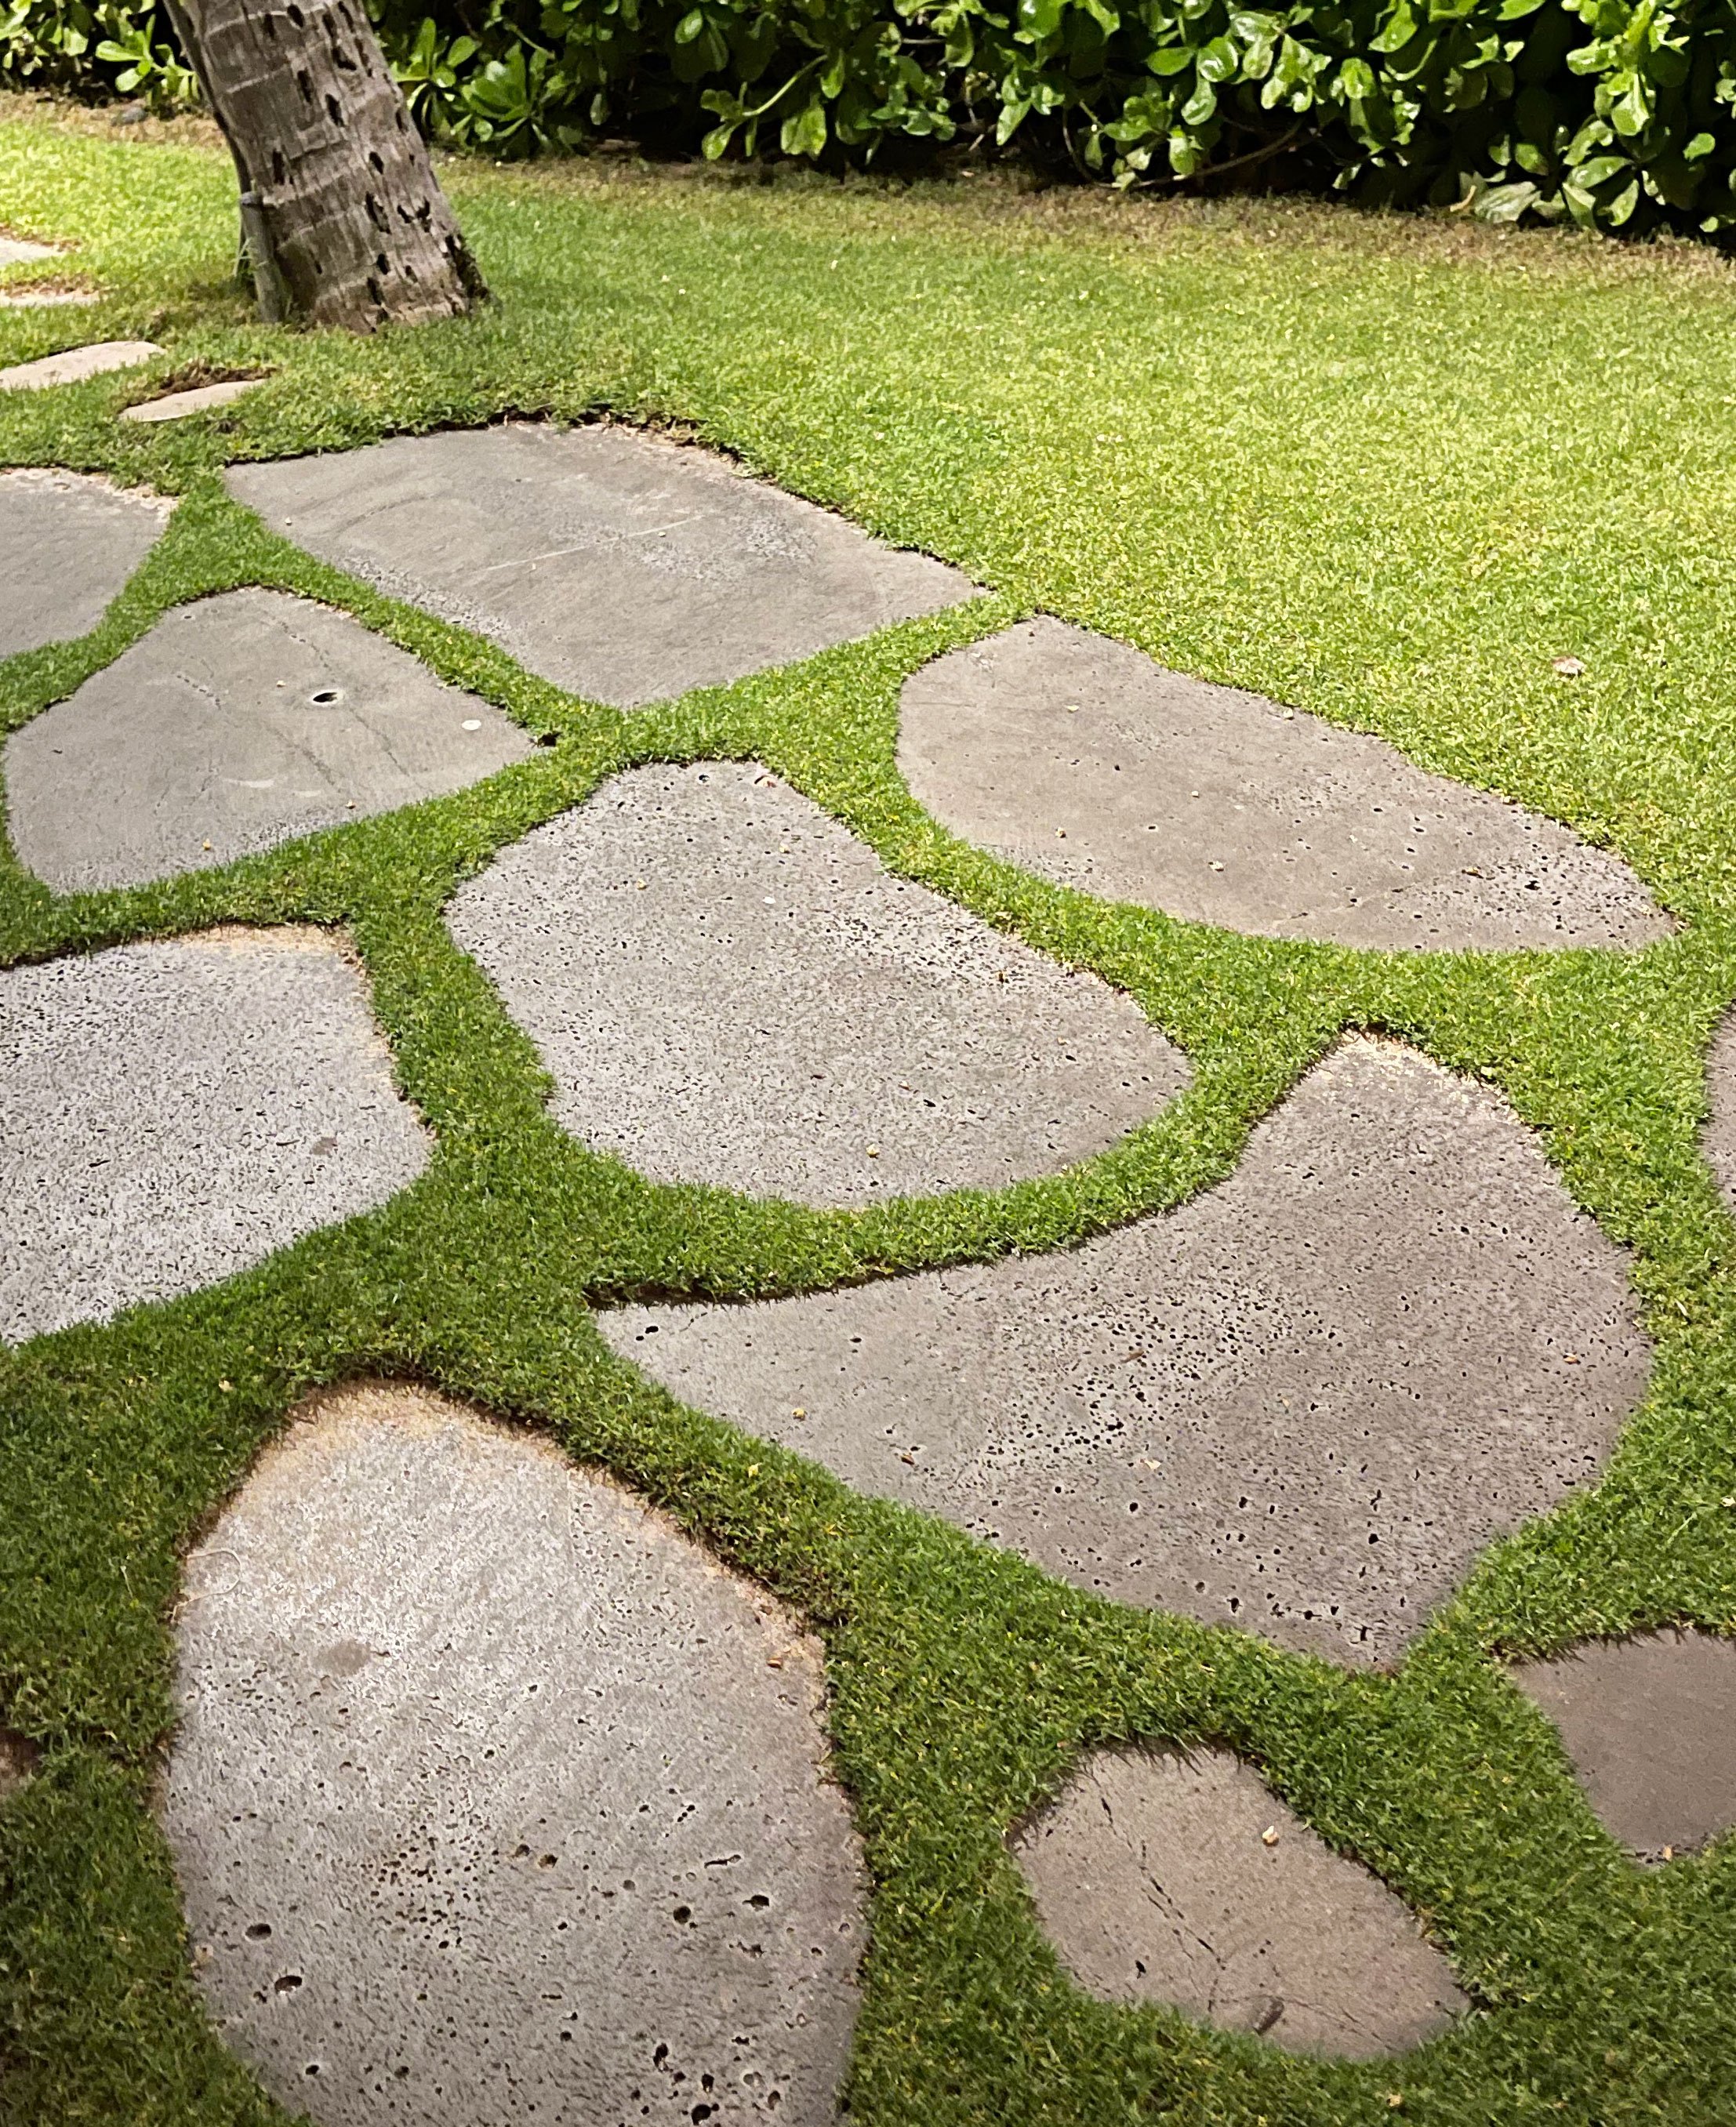  Cast stone pavers at Royal Hawaiian Center, O’ahu. 